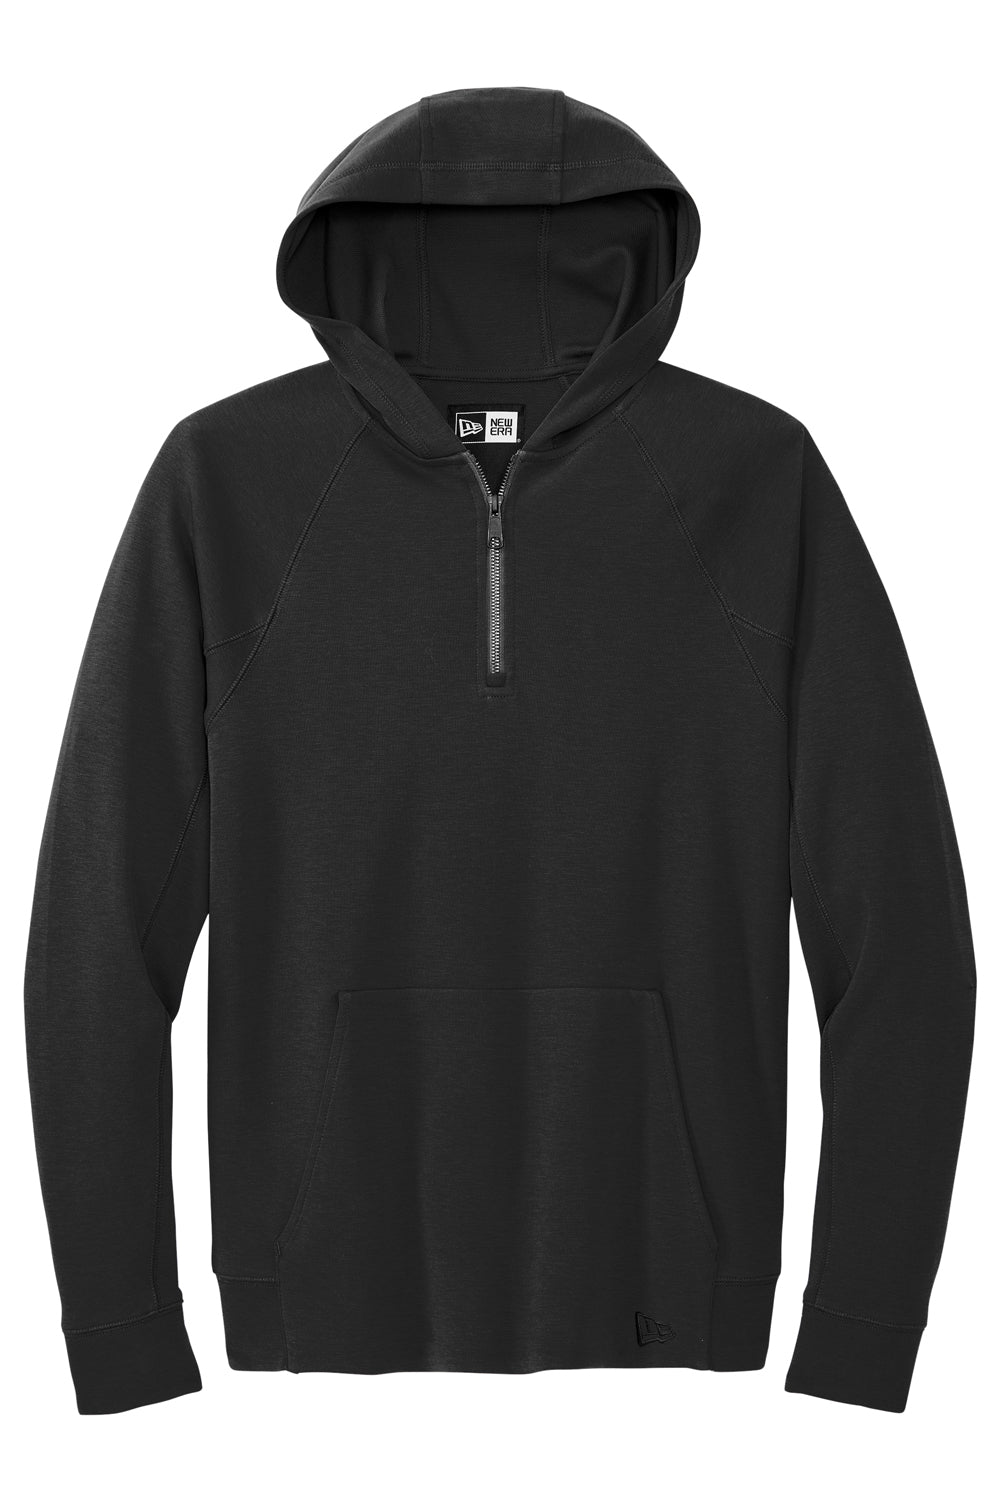 New Era NEA541 Mens STS 1/4 Zip Hooded Sweatshirt Hoodie Black Flat Front